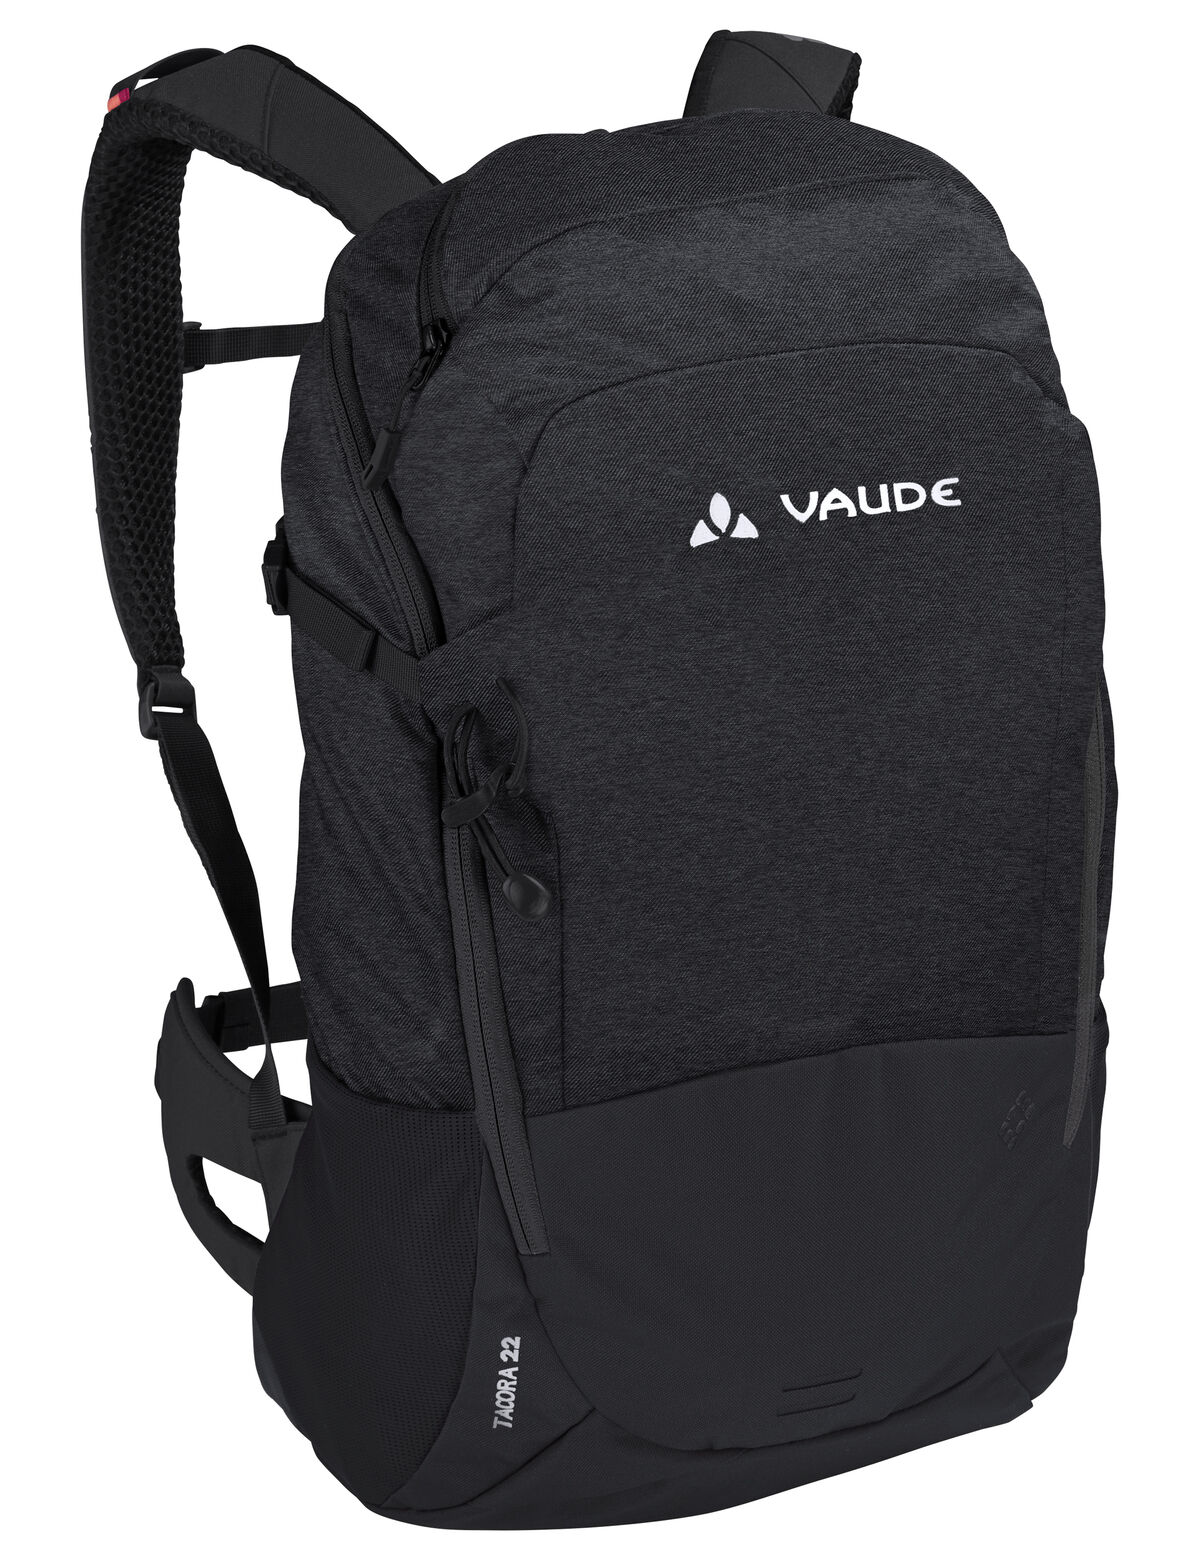 Vaude - Tacora 22 - Hiking backpack - Women's